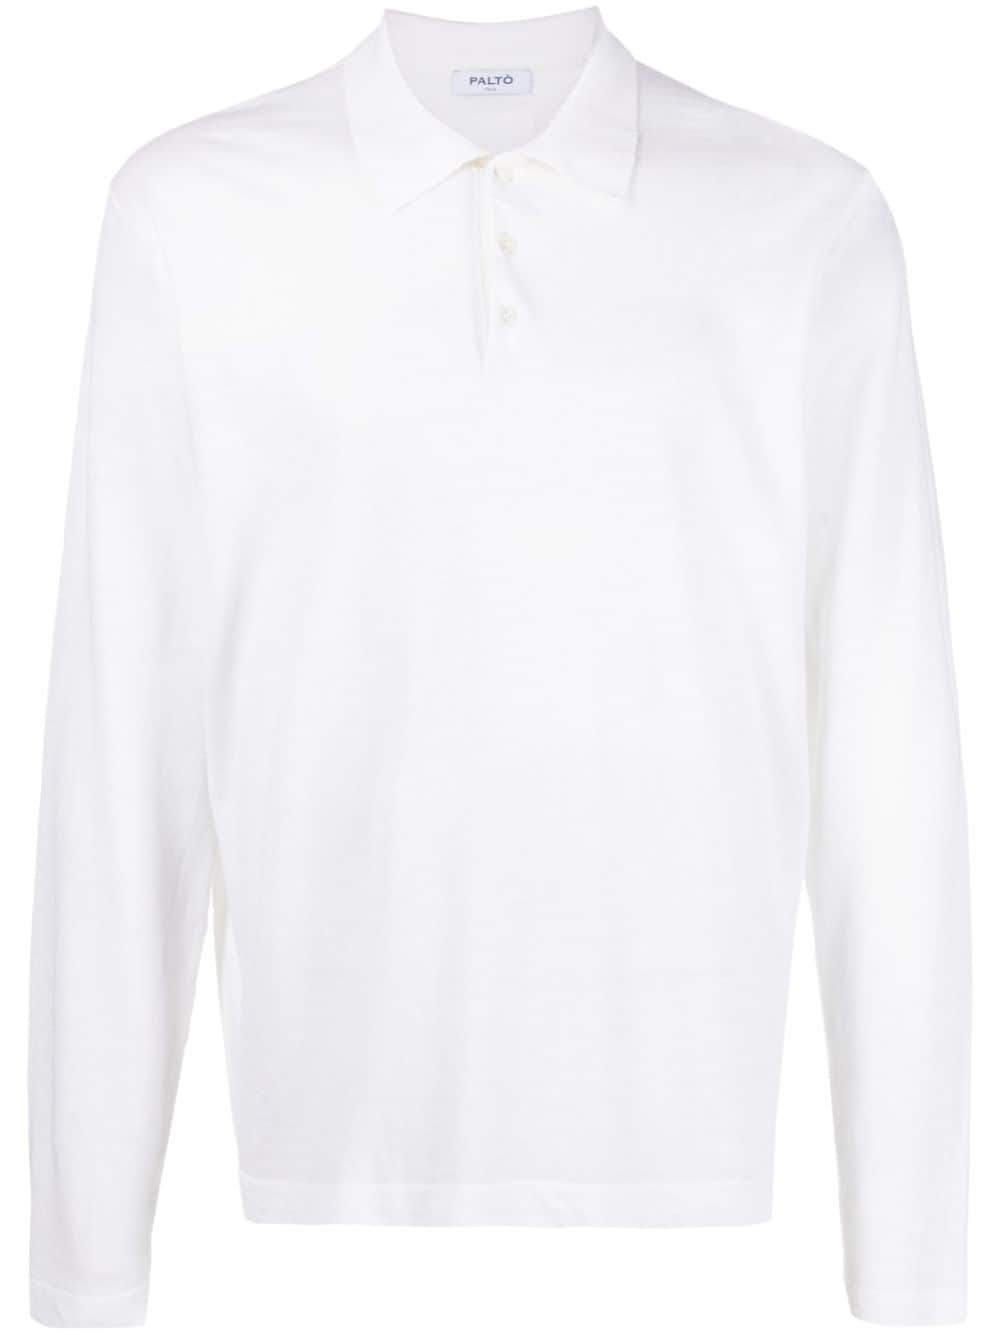 Palto' PALTO'- Long Sleeve Linen Blend Shirt